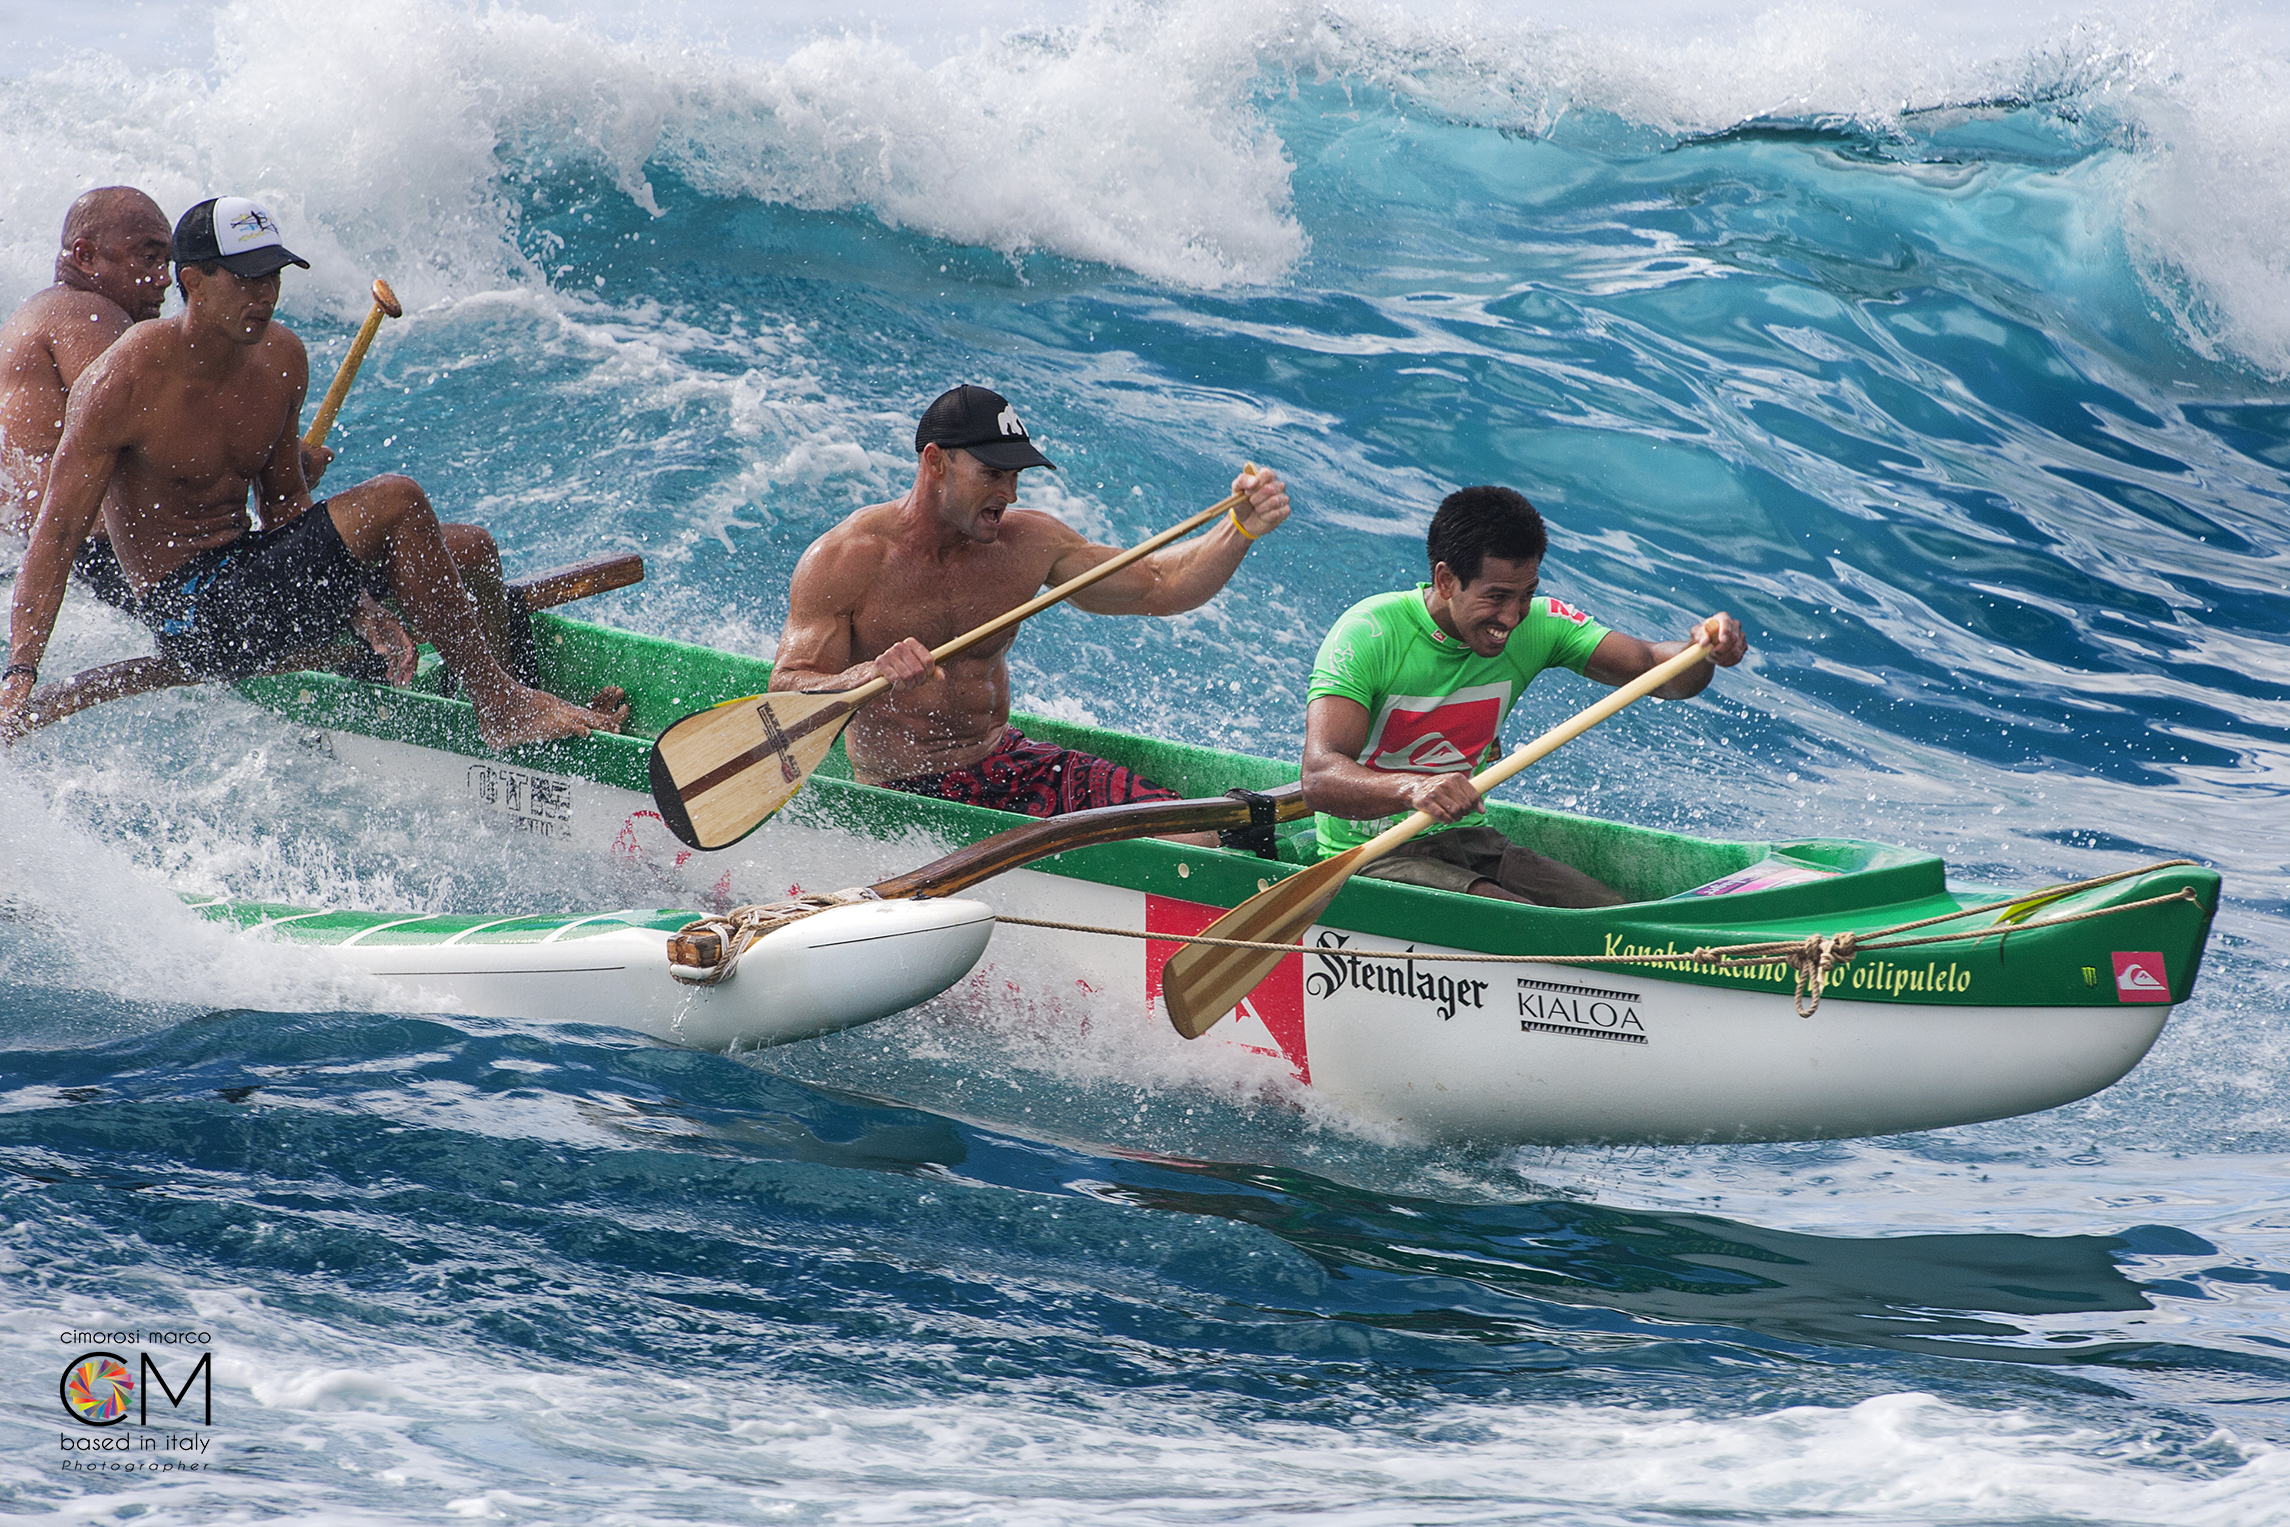 Kanoe series - Makaha - Oahu HI...